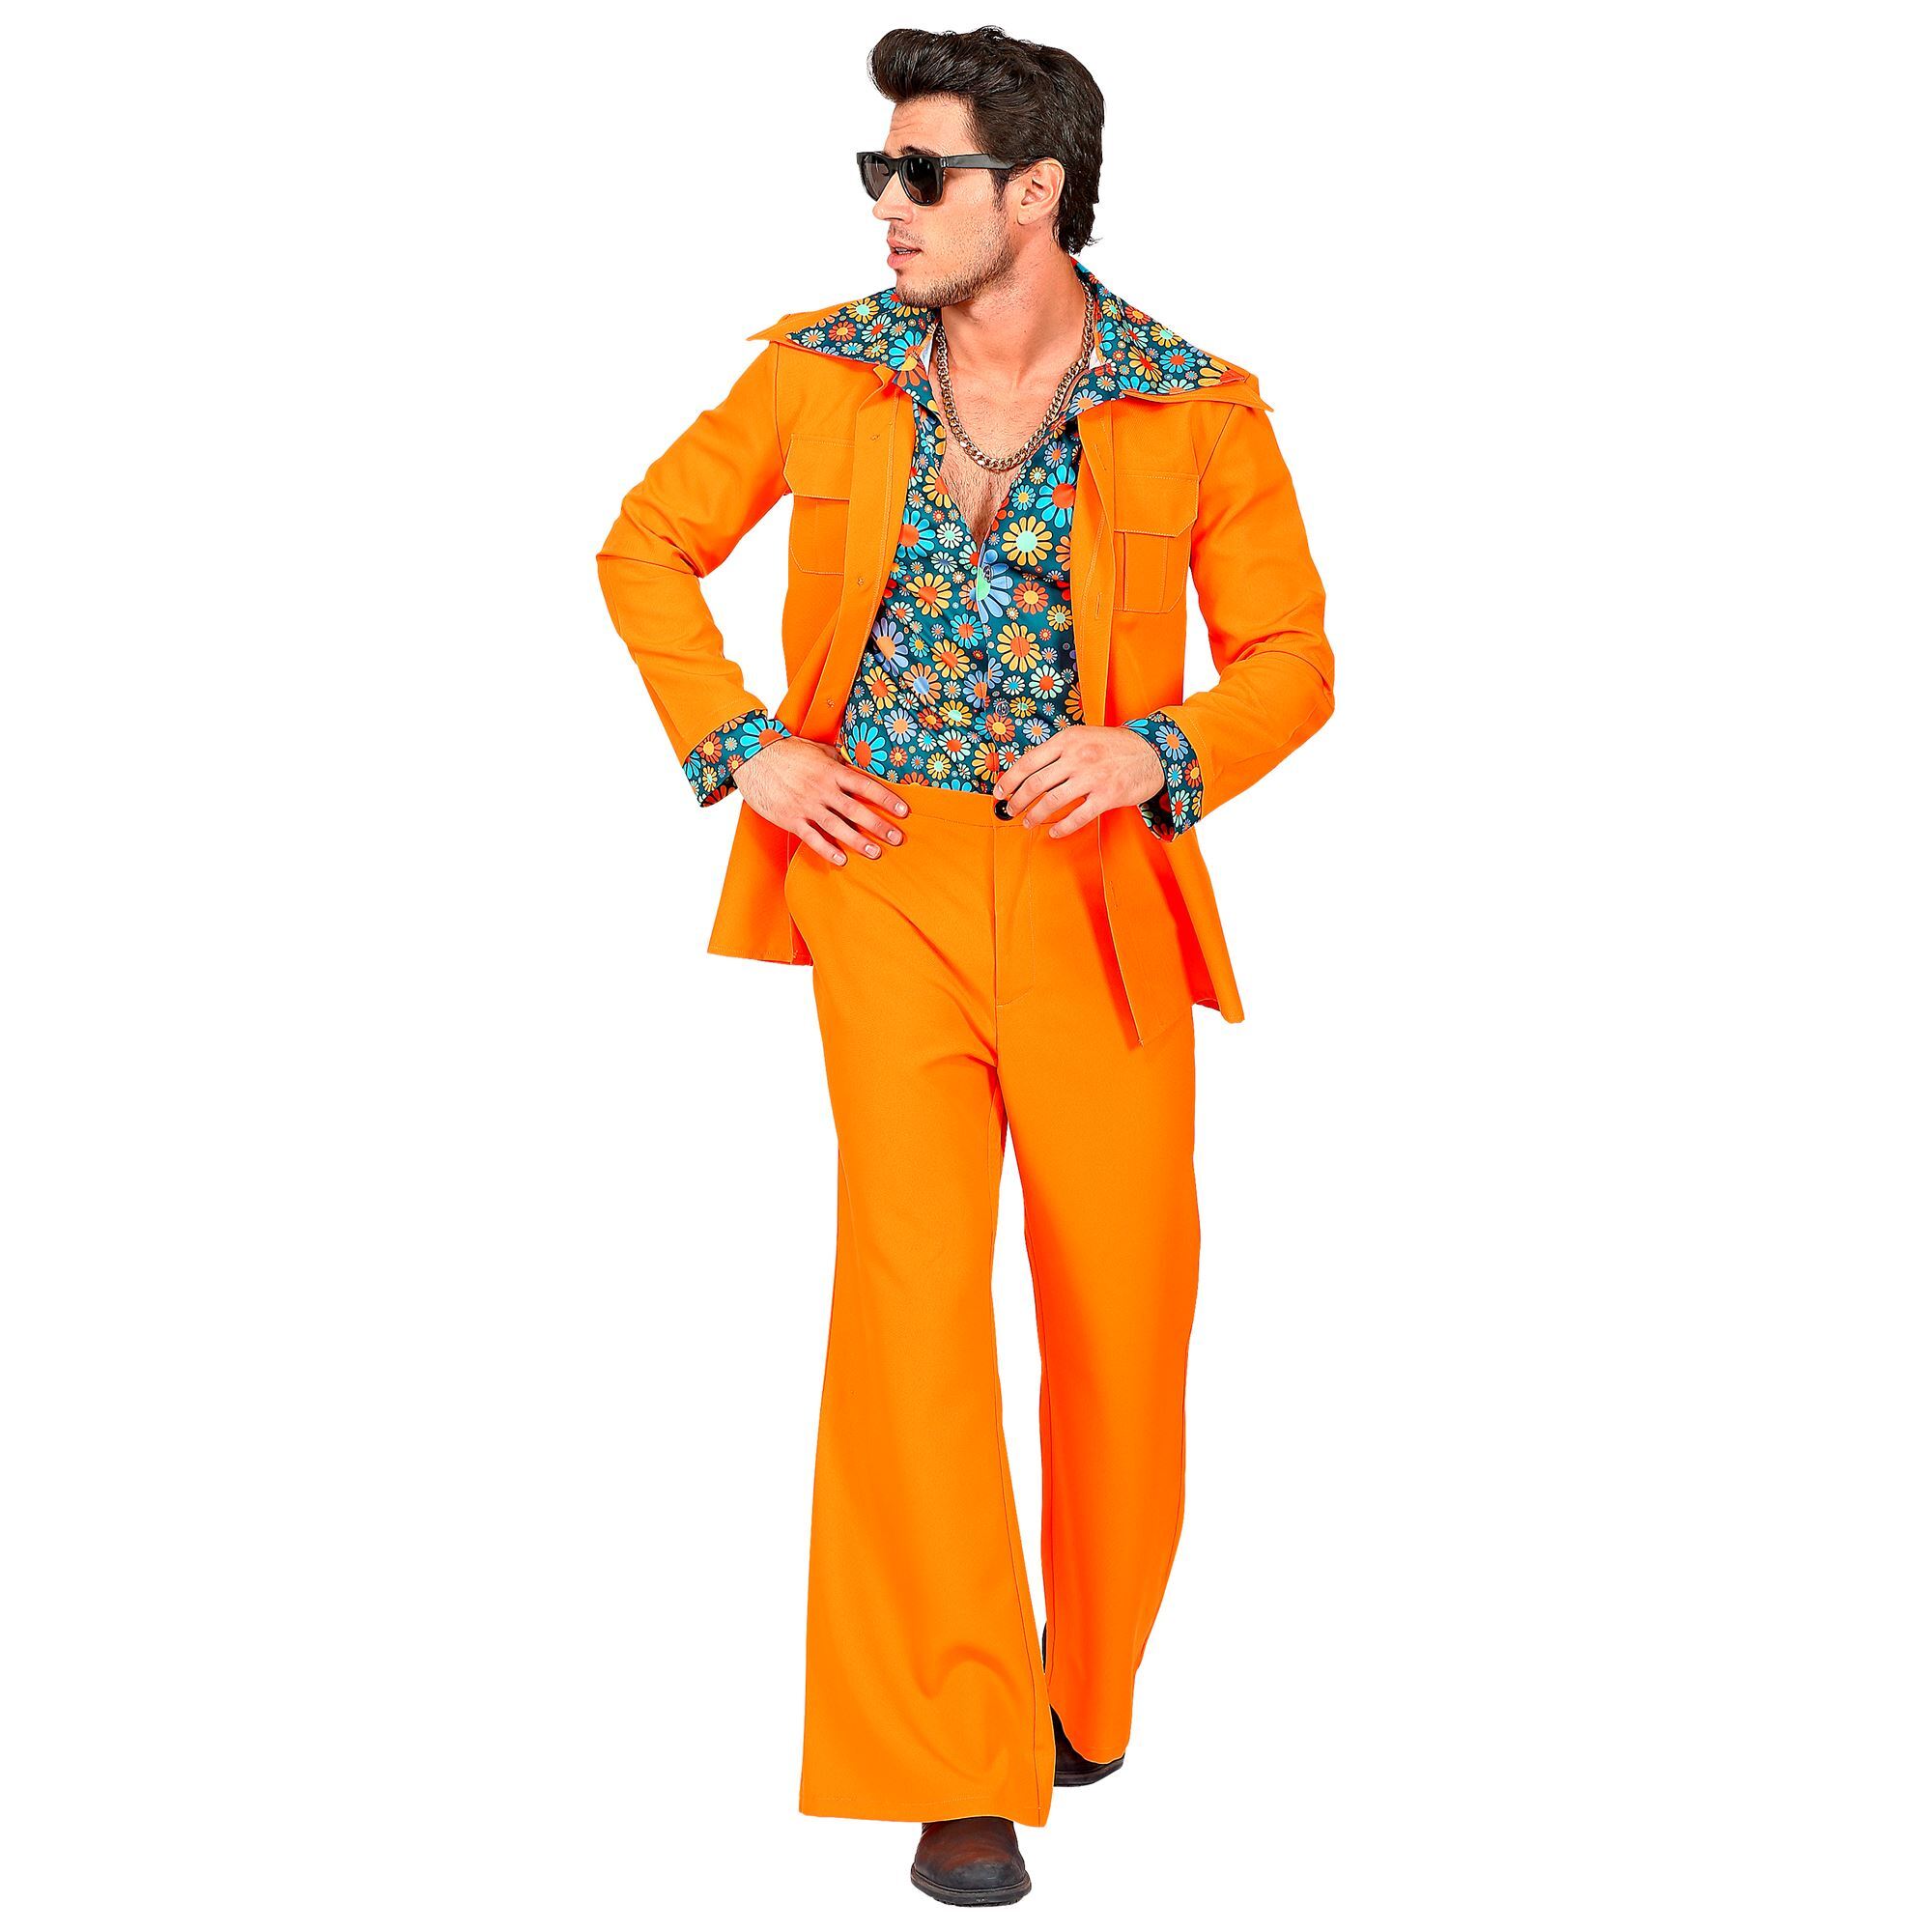 Oranje kostuum retro stijl 1988 man 